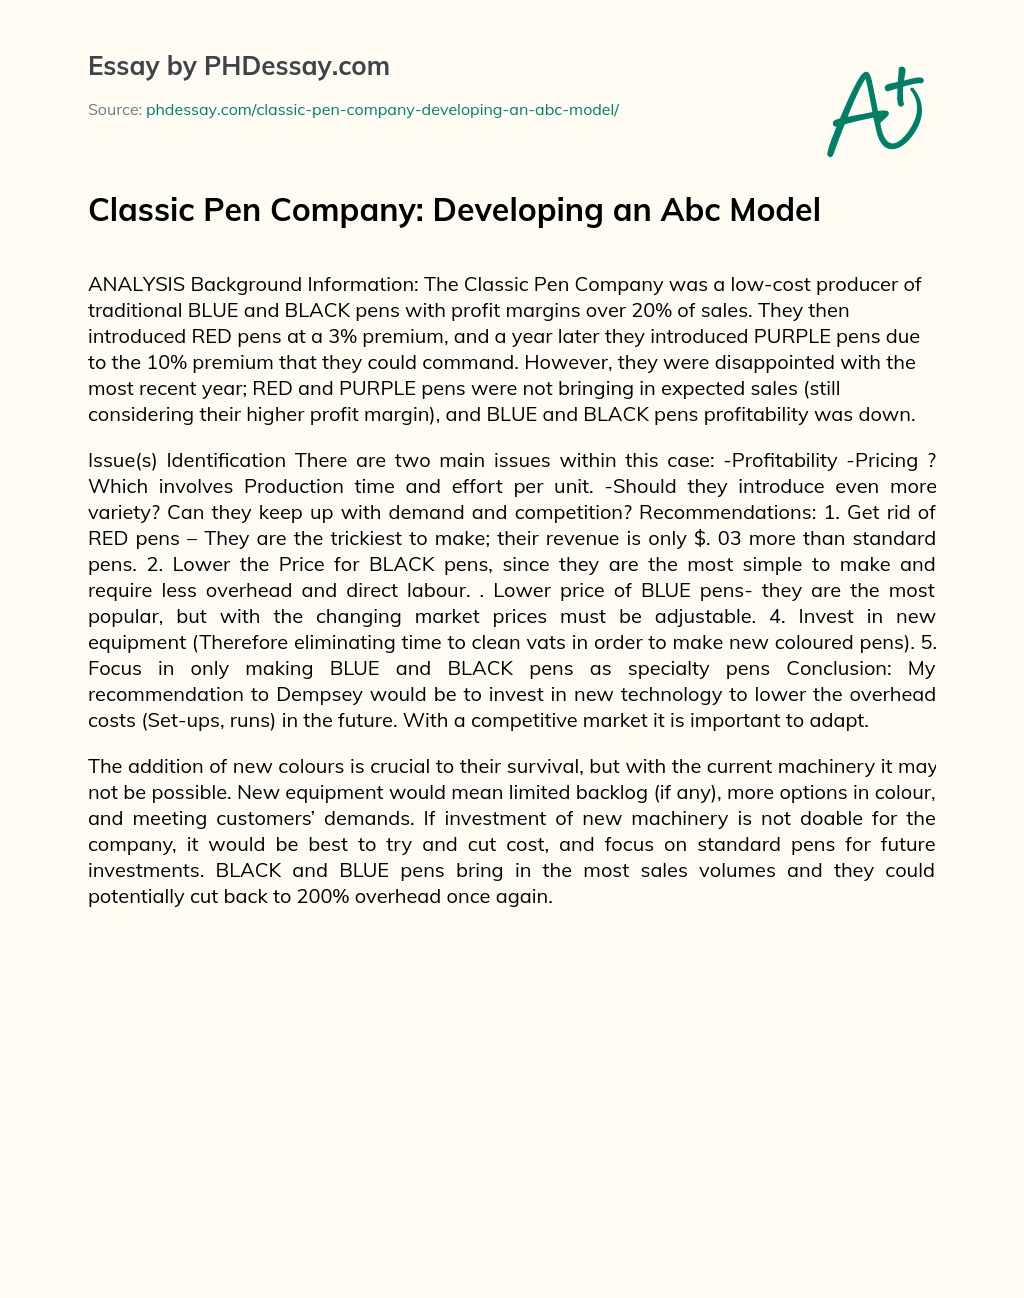 Classic Pen Company: Developing an Abc Model essay